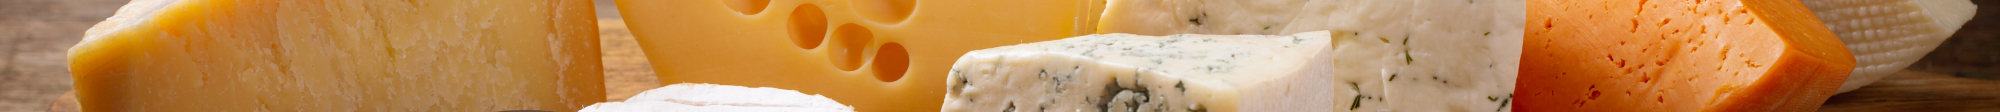 Comprar  quesos Suiza gourmet online | Mixtura Gourmet